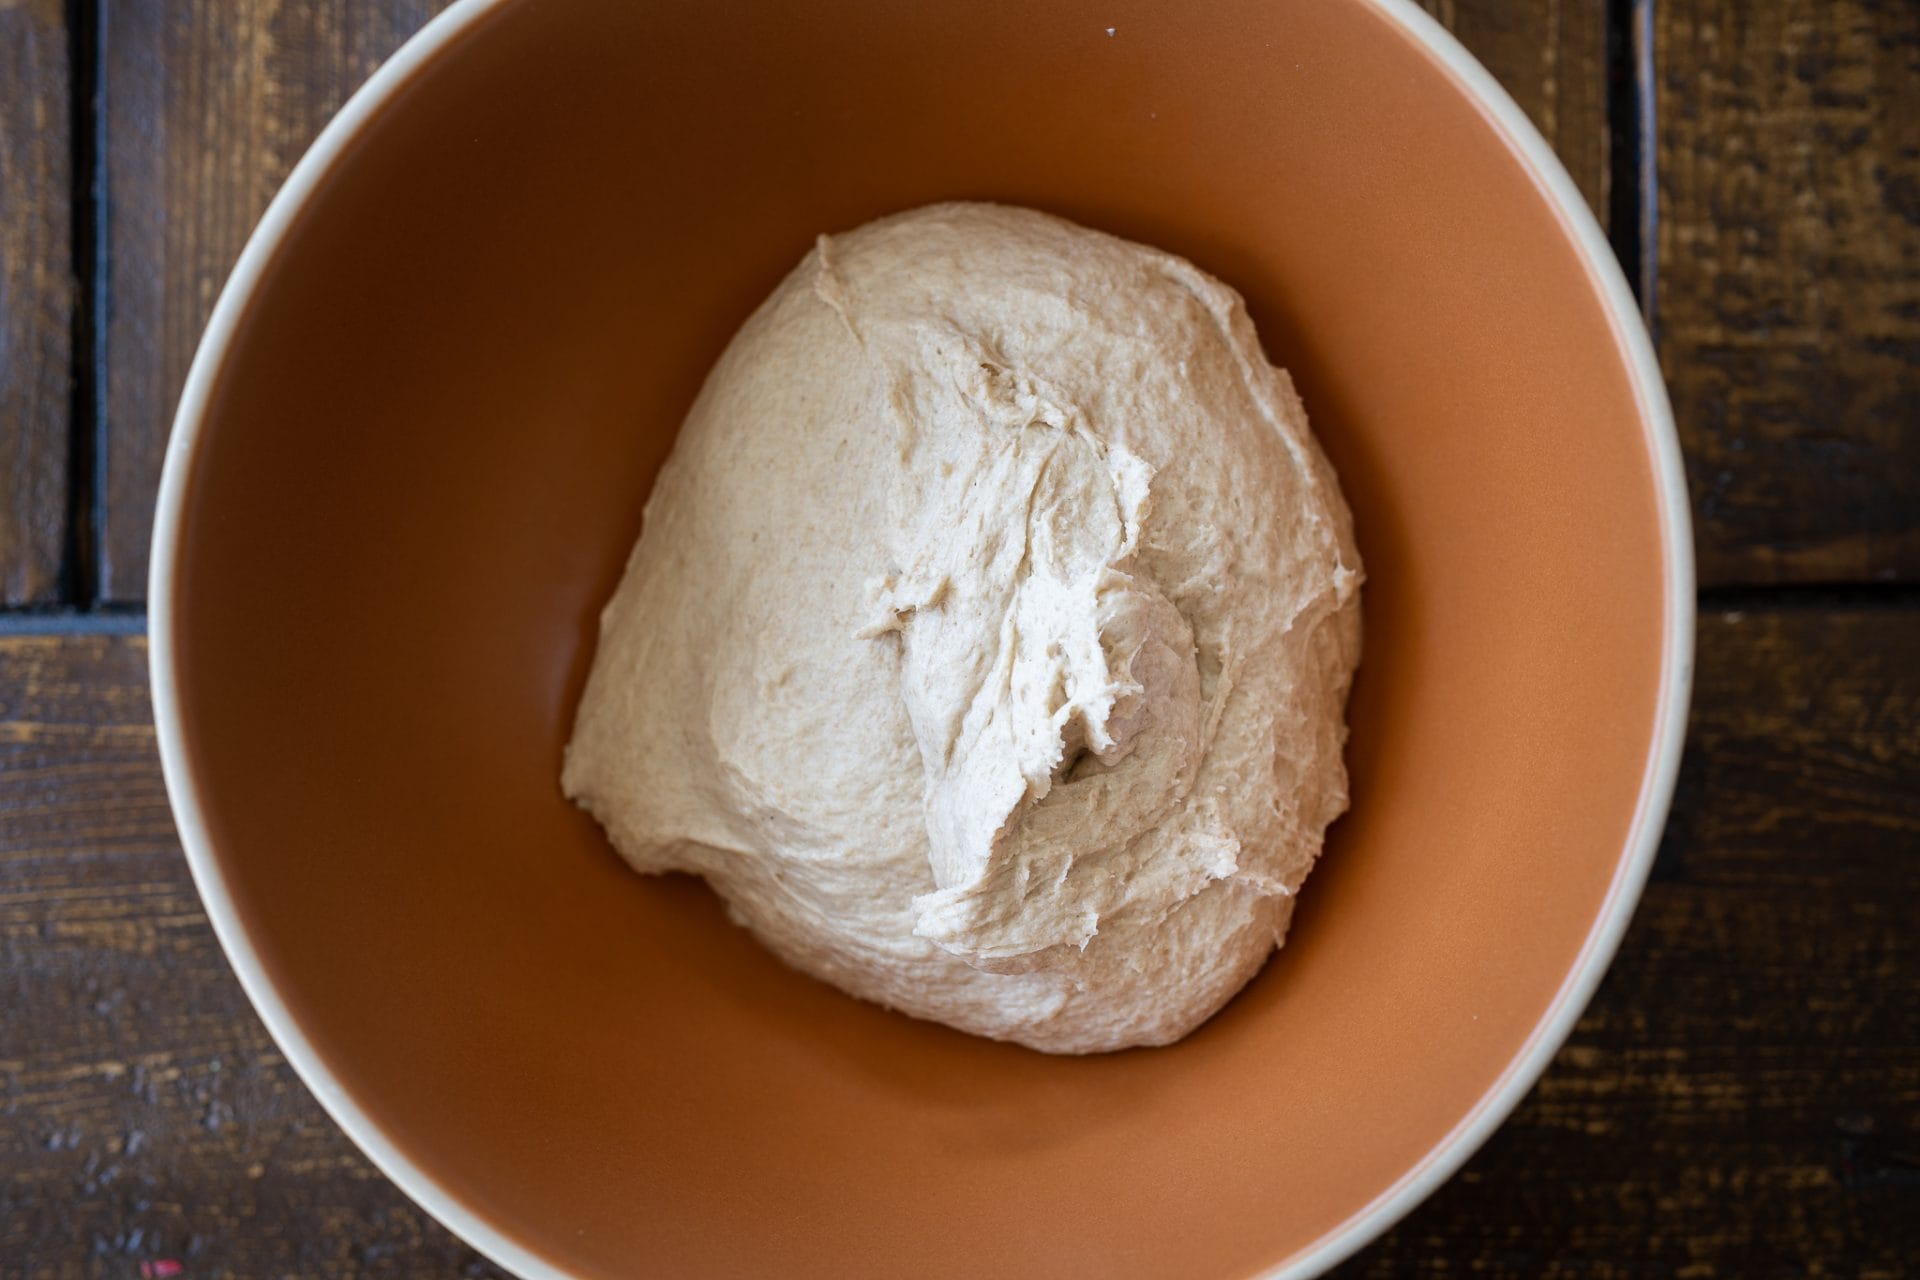 Hot dog bun dough at the start of bulk fermentation